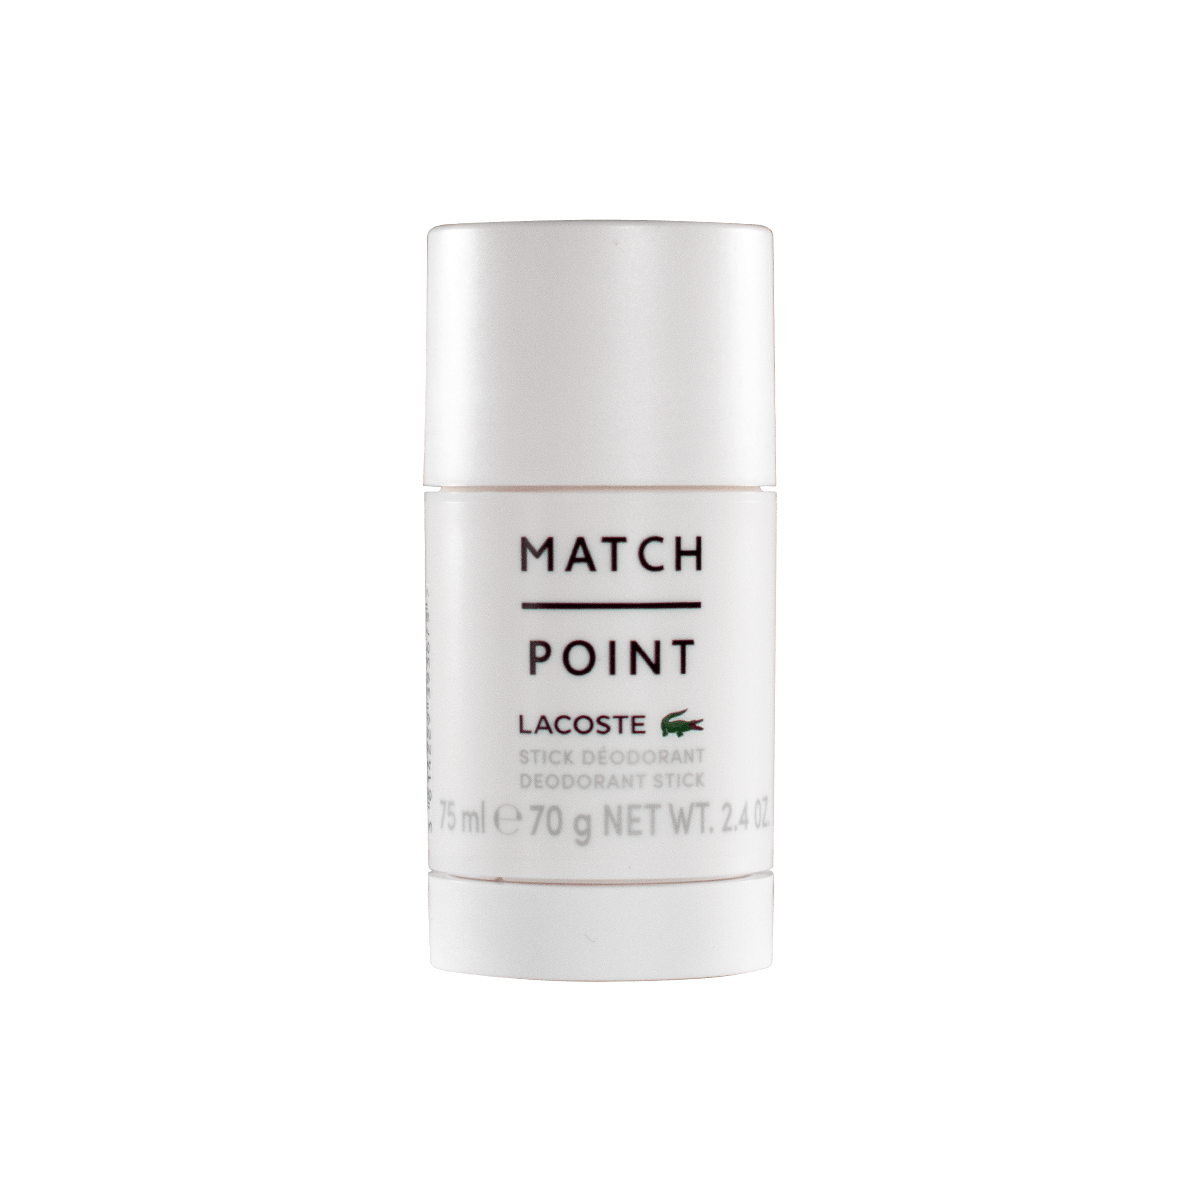 Køb Lacoste Match Point Stick - 75 Med24.dk